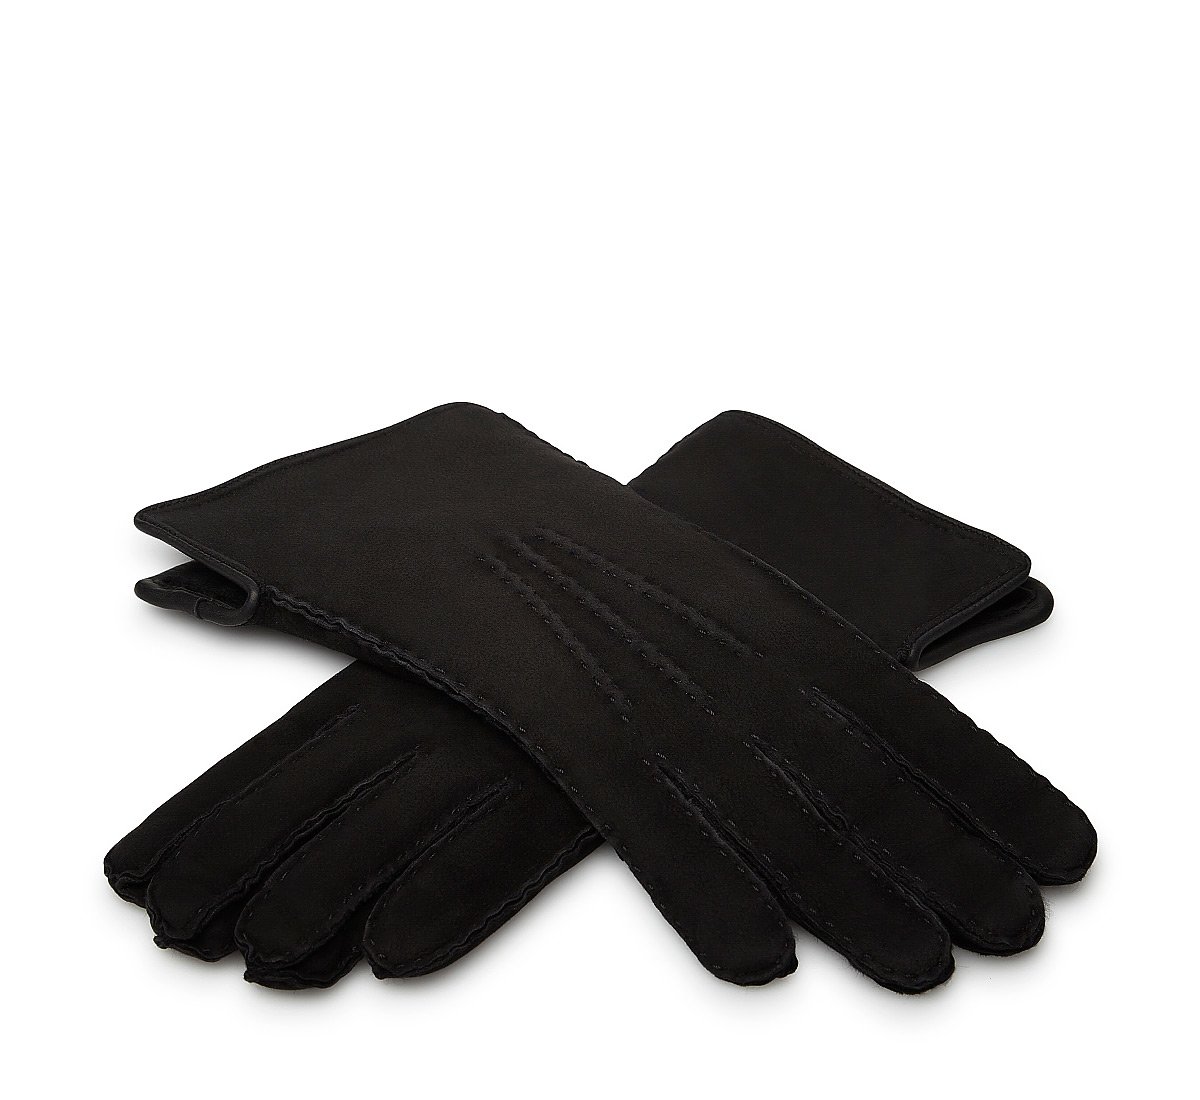 Black suede gloves